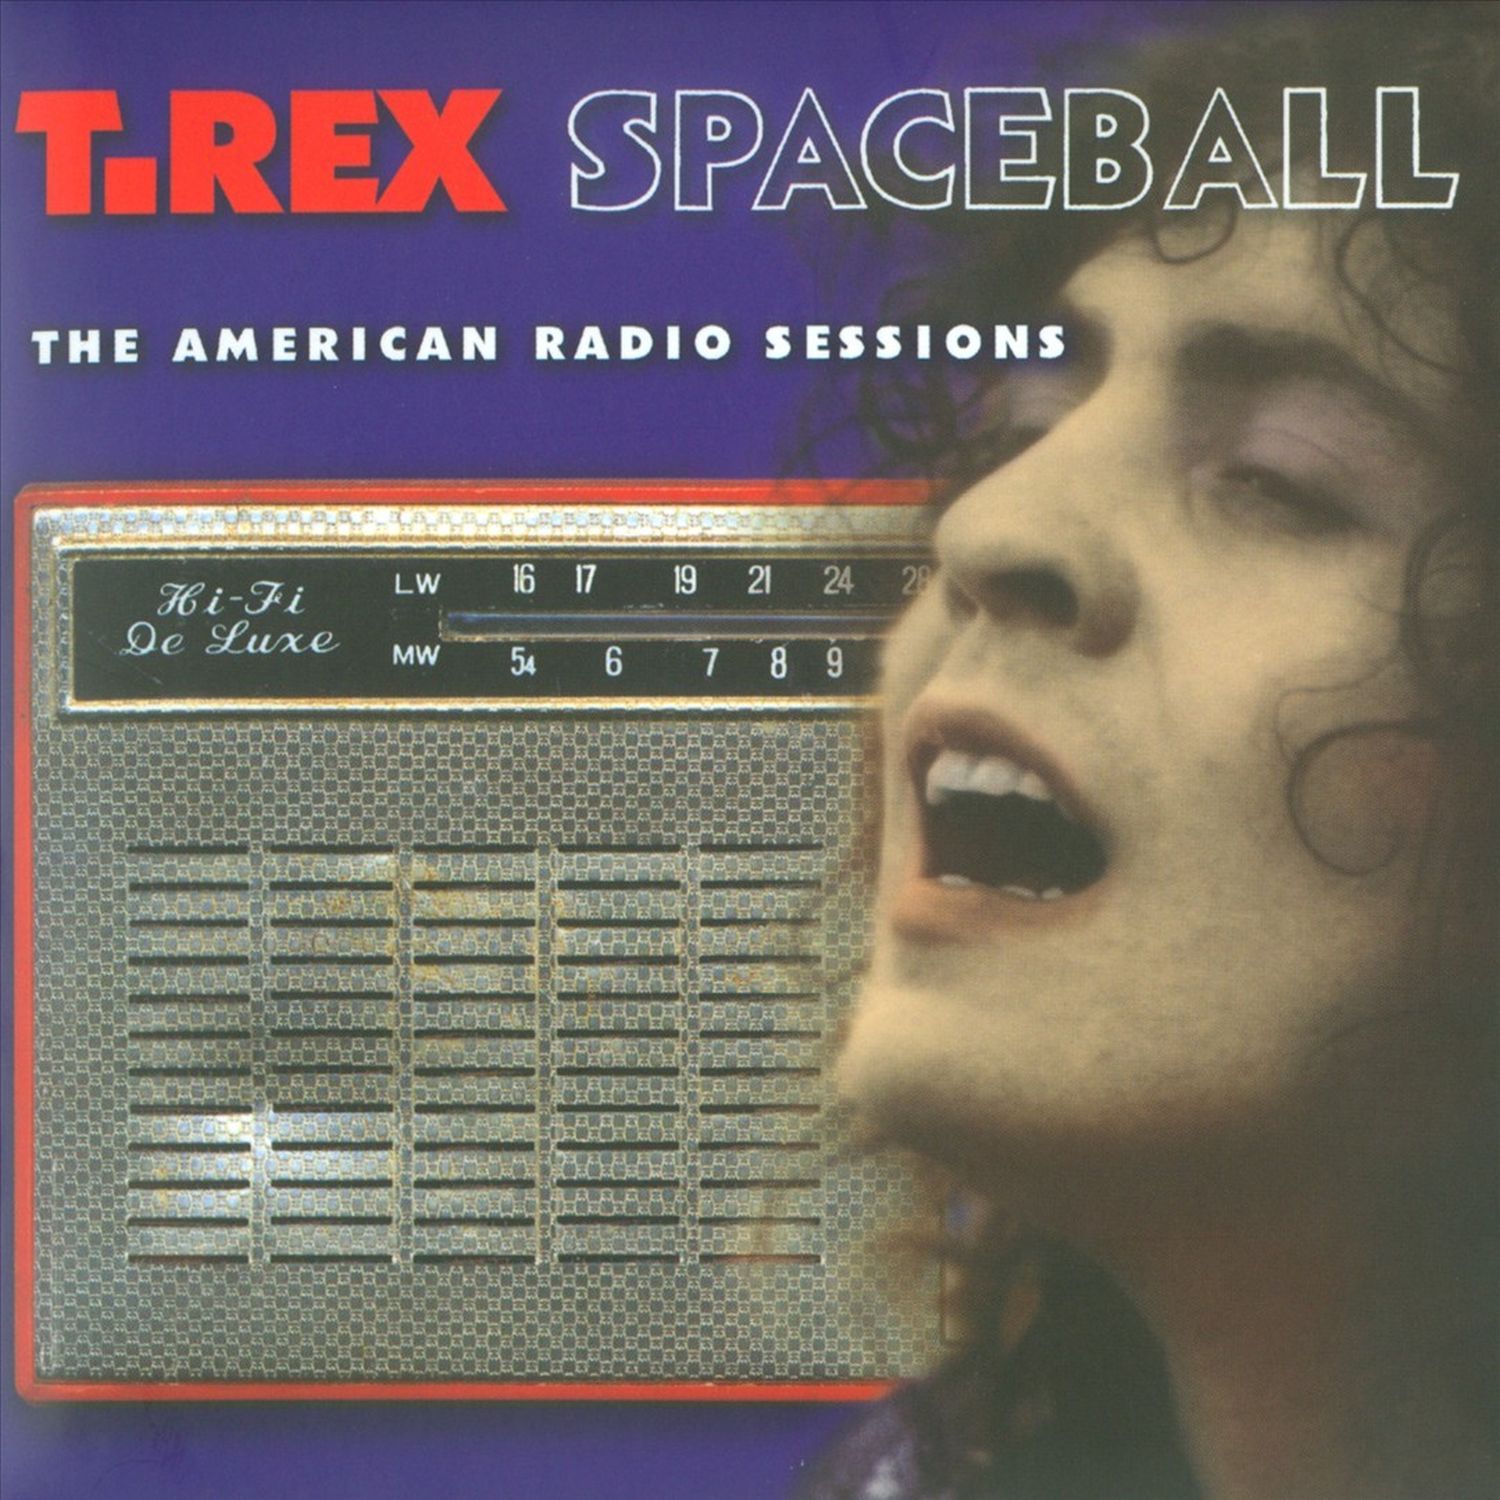 Spaceball Ricochet (WGLD Radio, Chicago, 11th Dec. 1971)